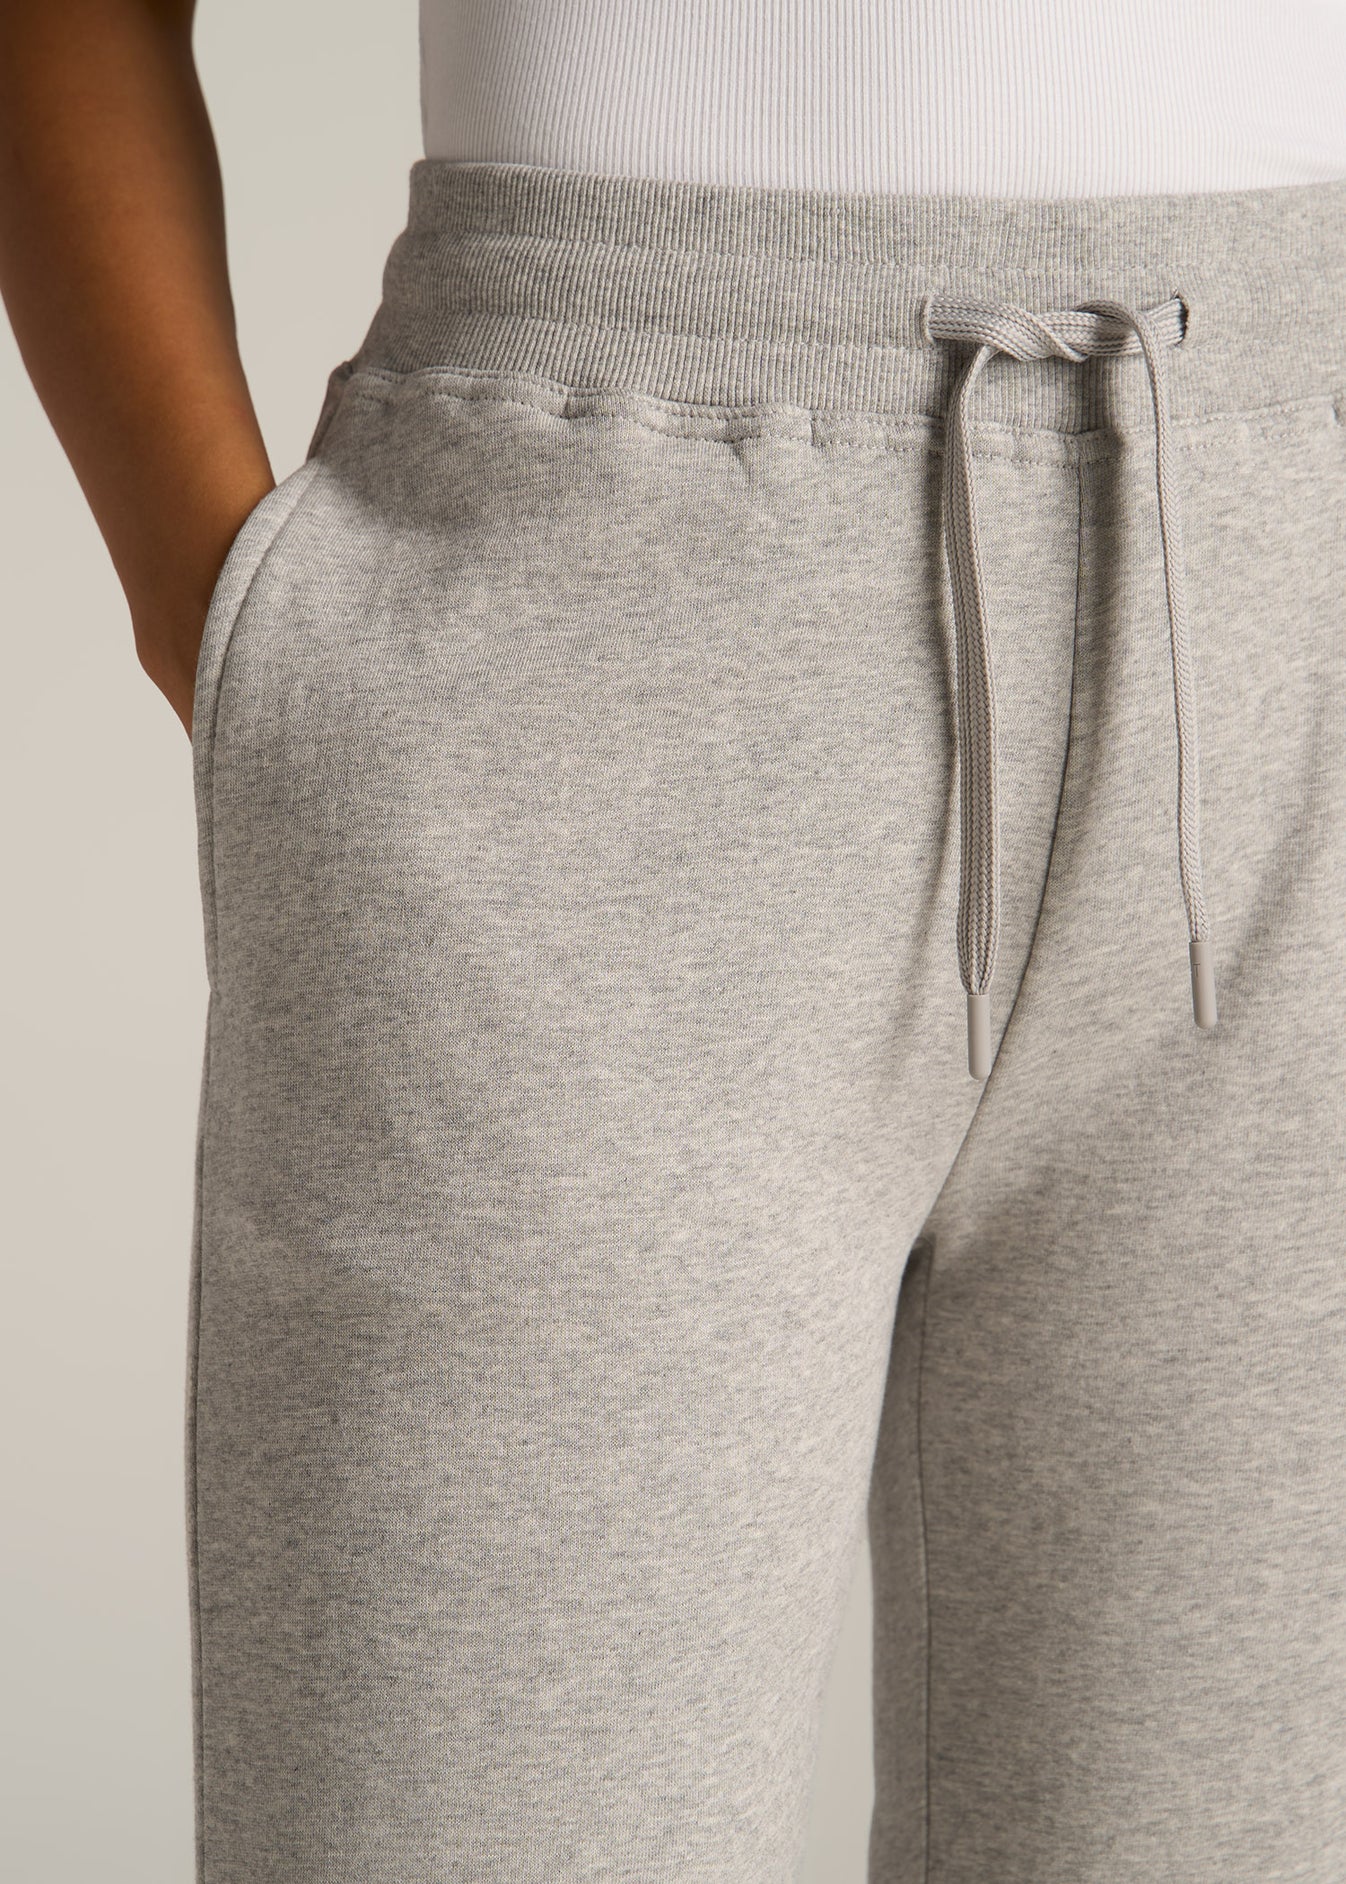 Grey Sweatpants for Tall Women: Fleece Open Bottom Pants – American Tall